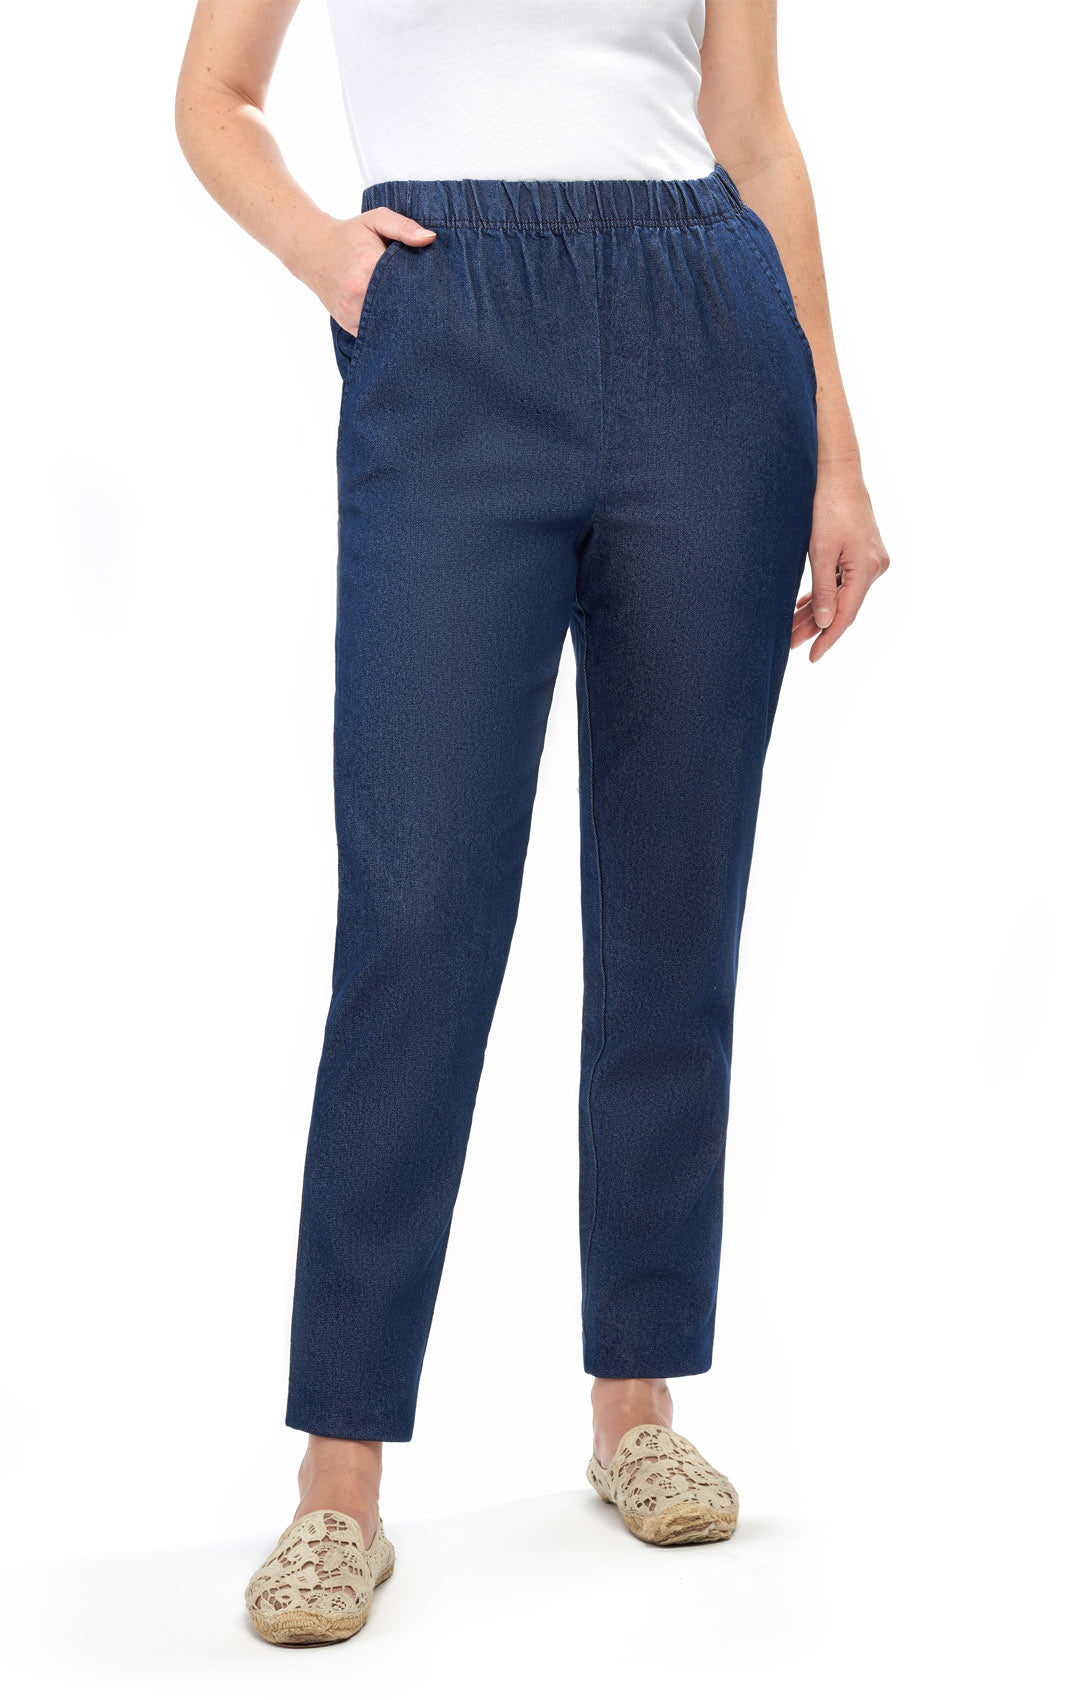 Baggy Jeans,SAANU'S FASHION - STYLISH SIX POCKETS DENIM JEANS FOR GIRLS &  WOMEN